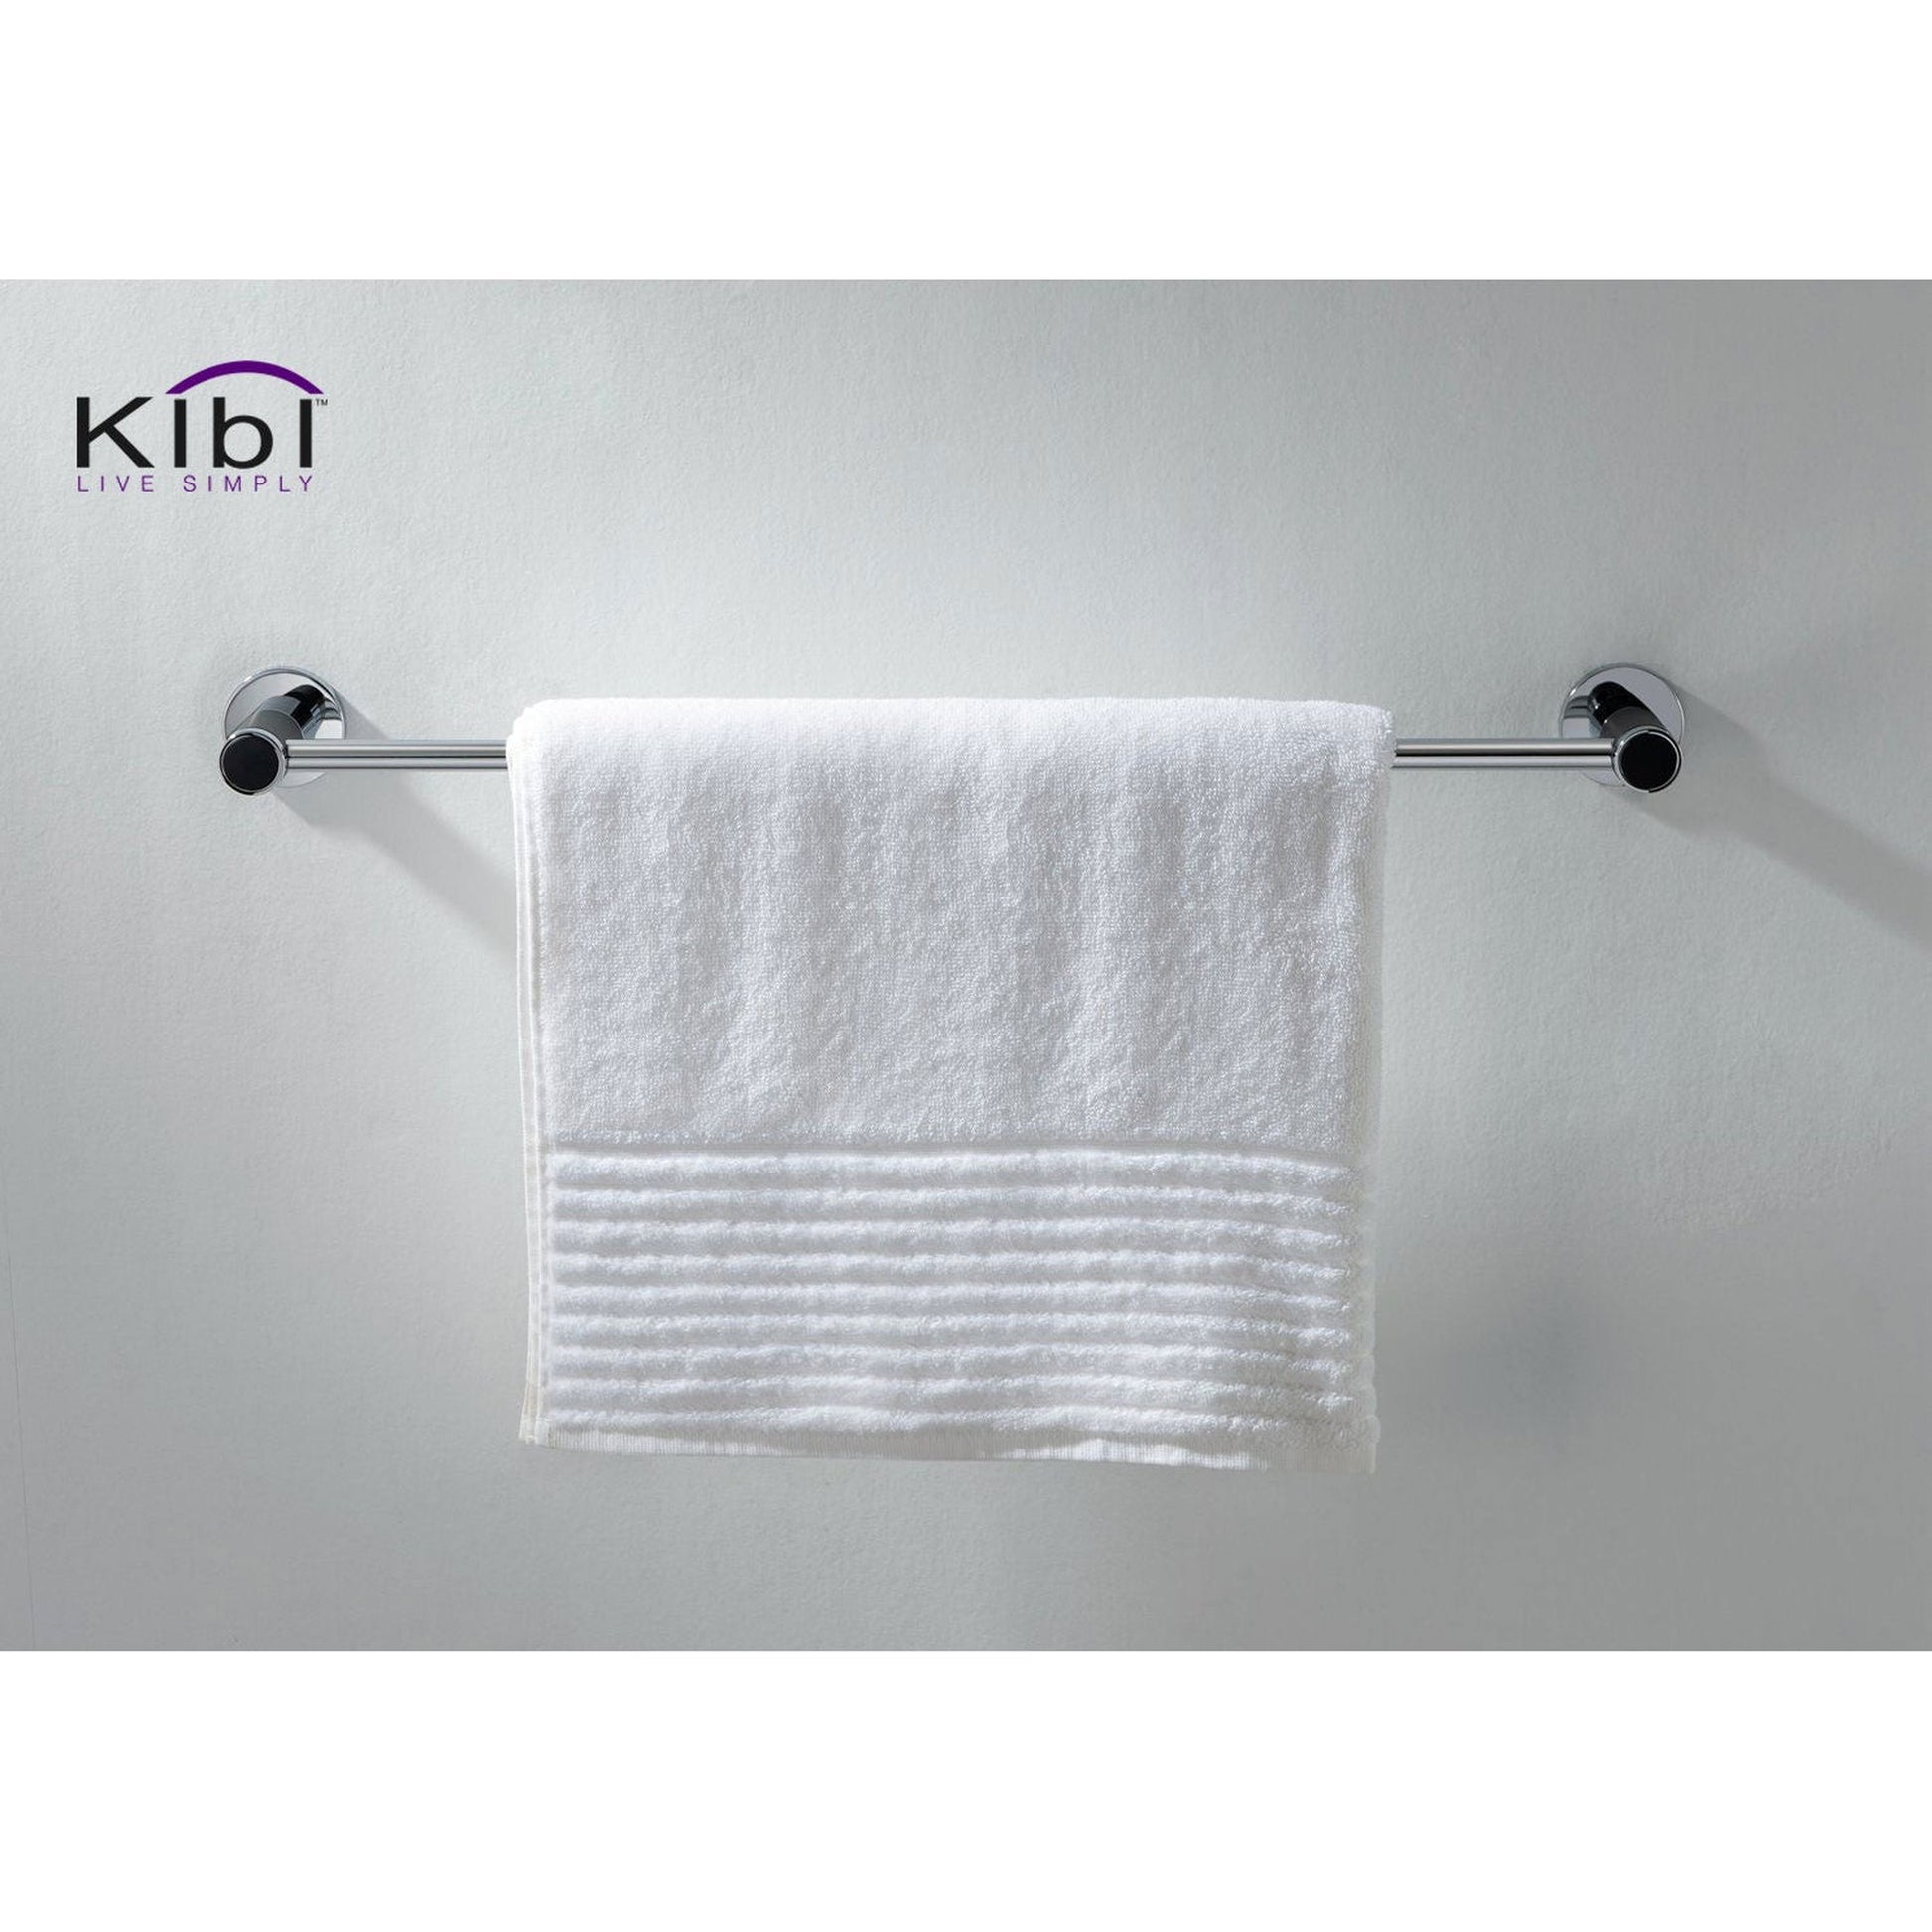 KIBI Abaco Bathroom Towel Bar in Chrome Black Finish